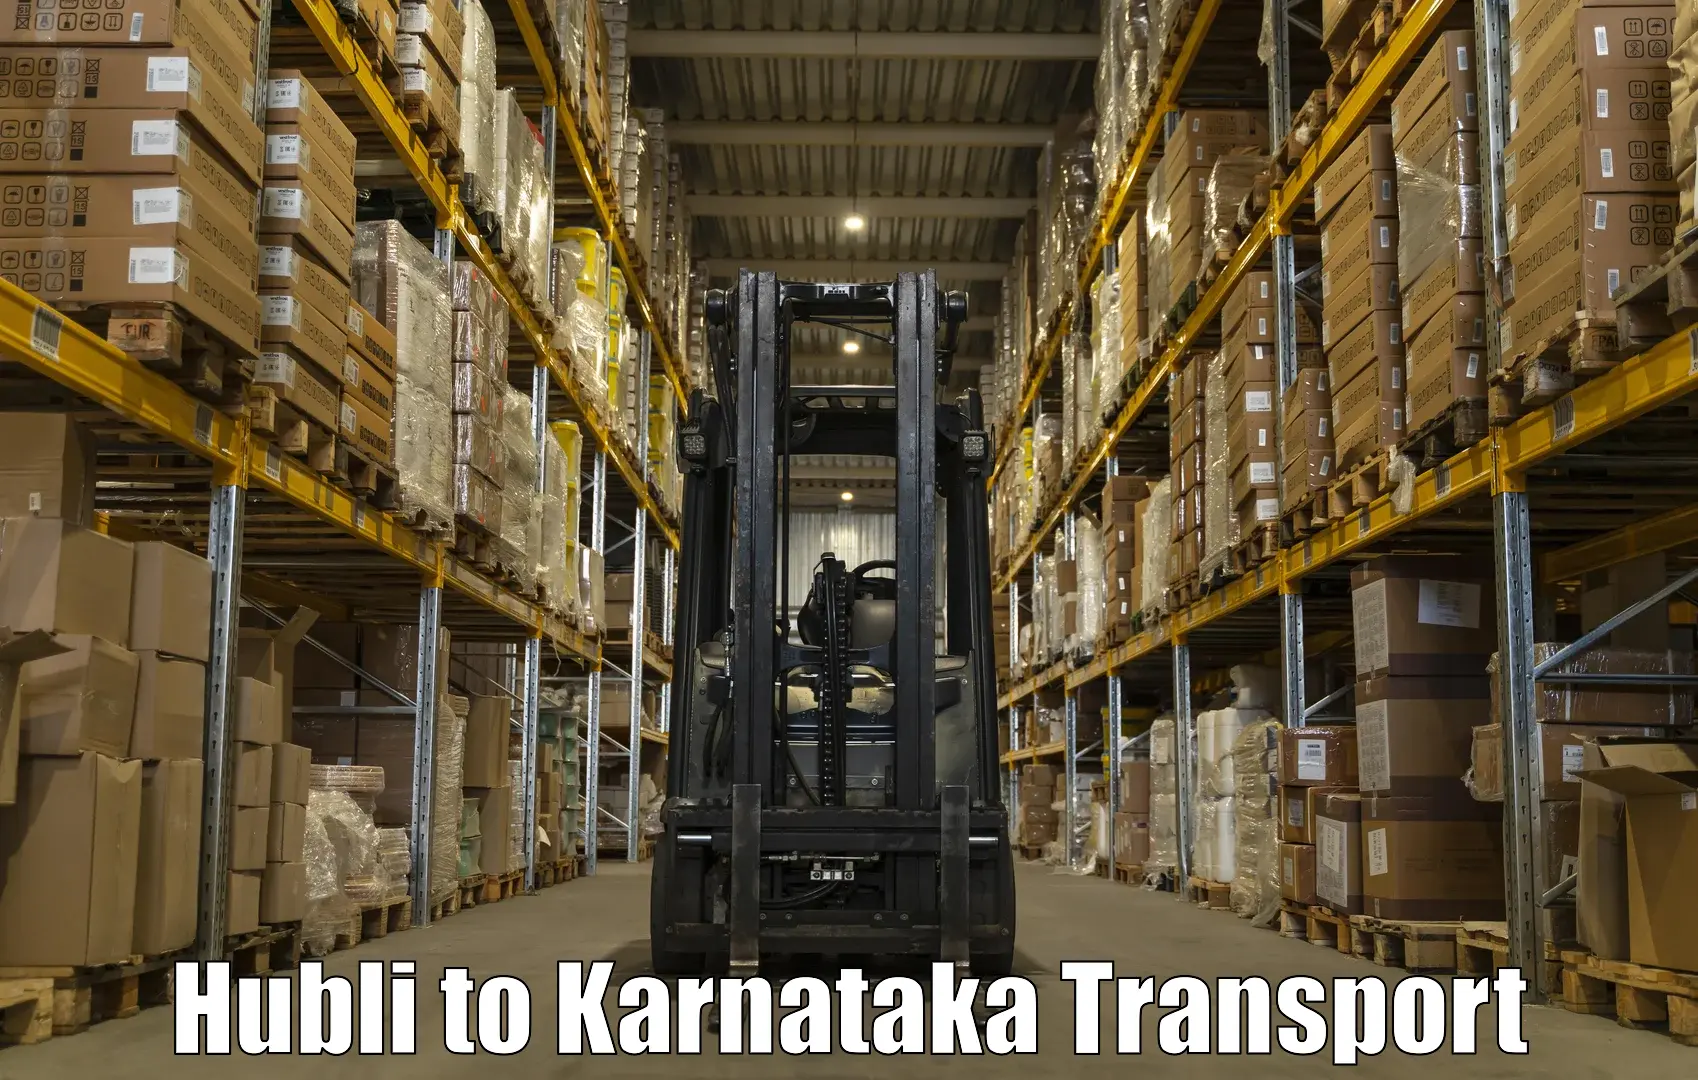 Commercial transport service Hubli to Ramanathapura